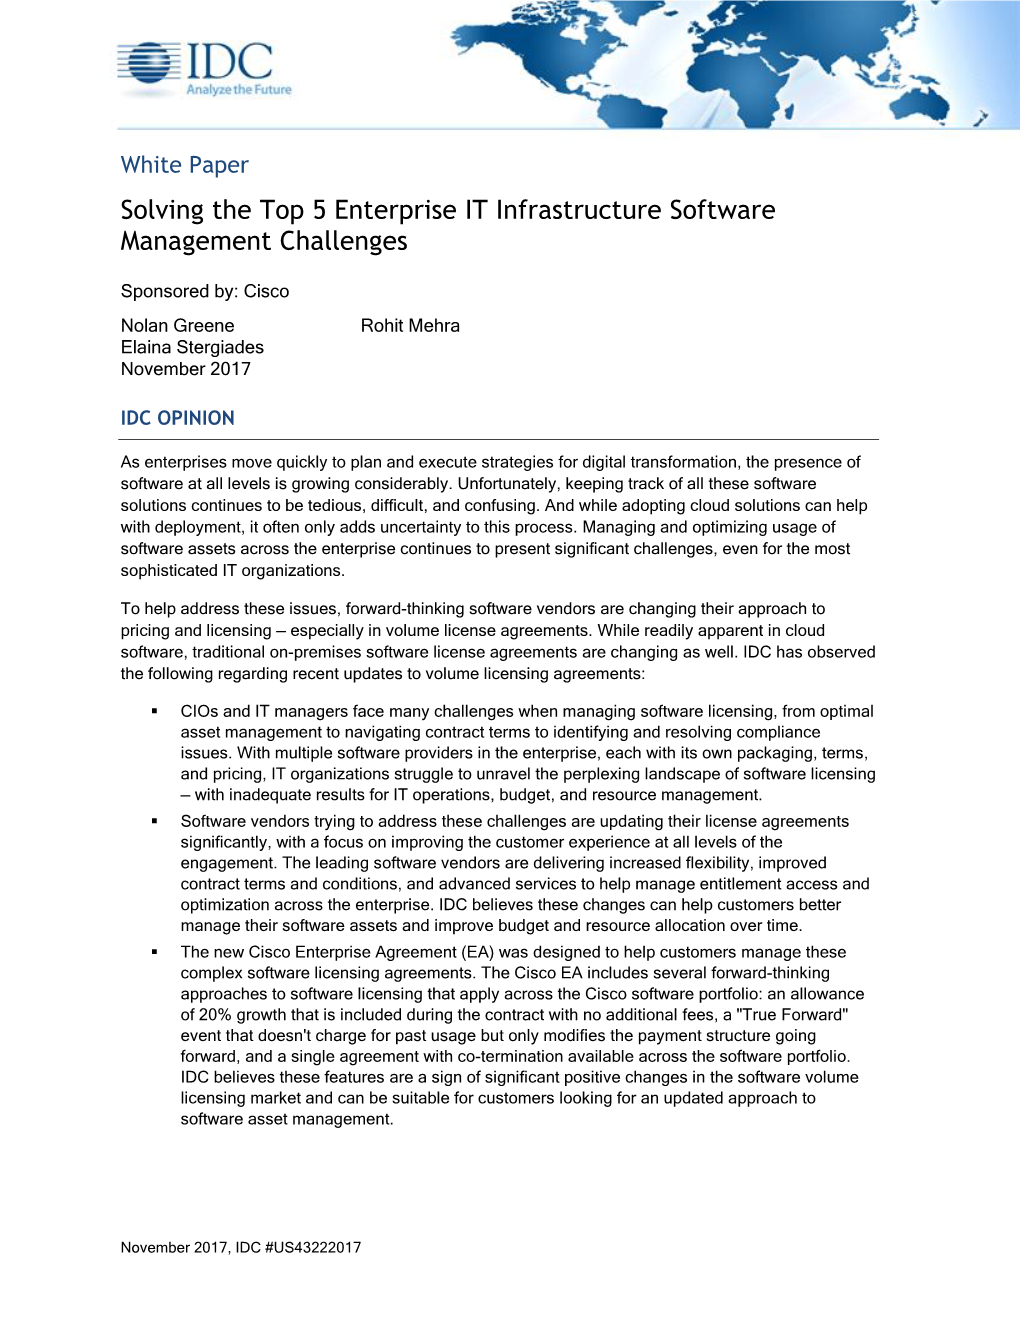 Solving the Top 5 Enterprise IT Infrastructure Software Management Challenges